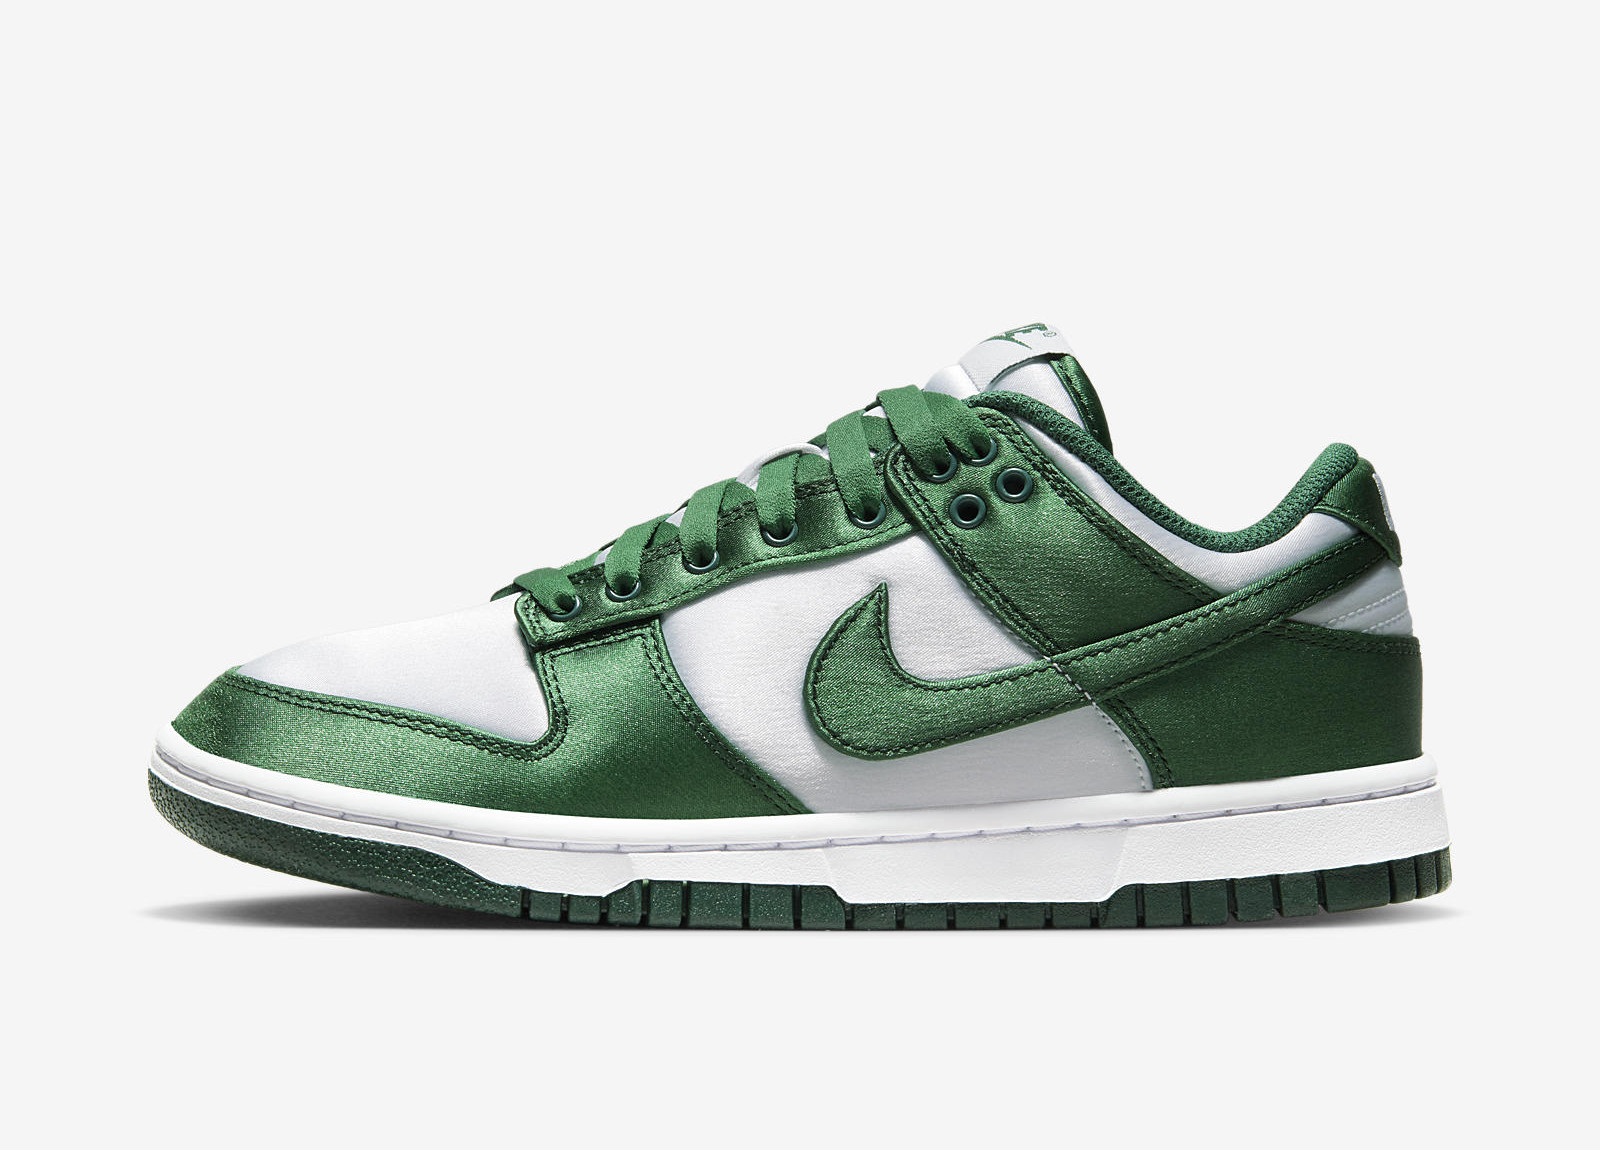 Nike Dunk Low
Green / White